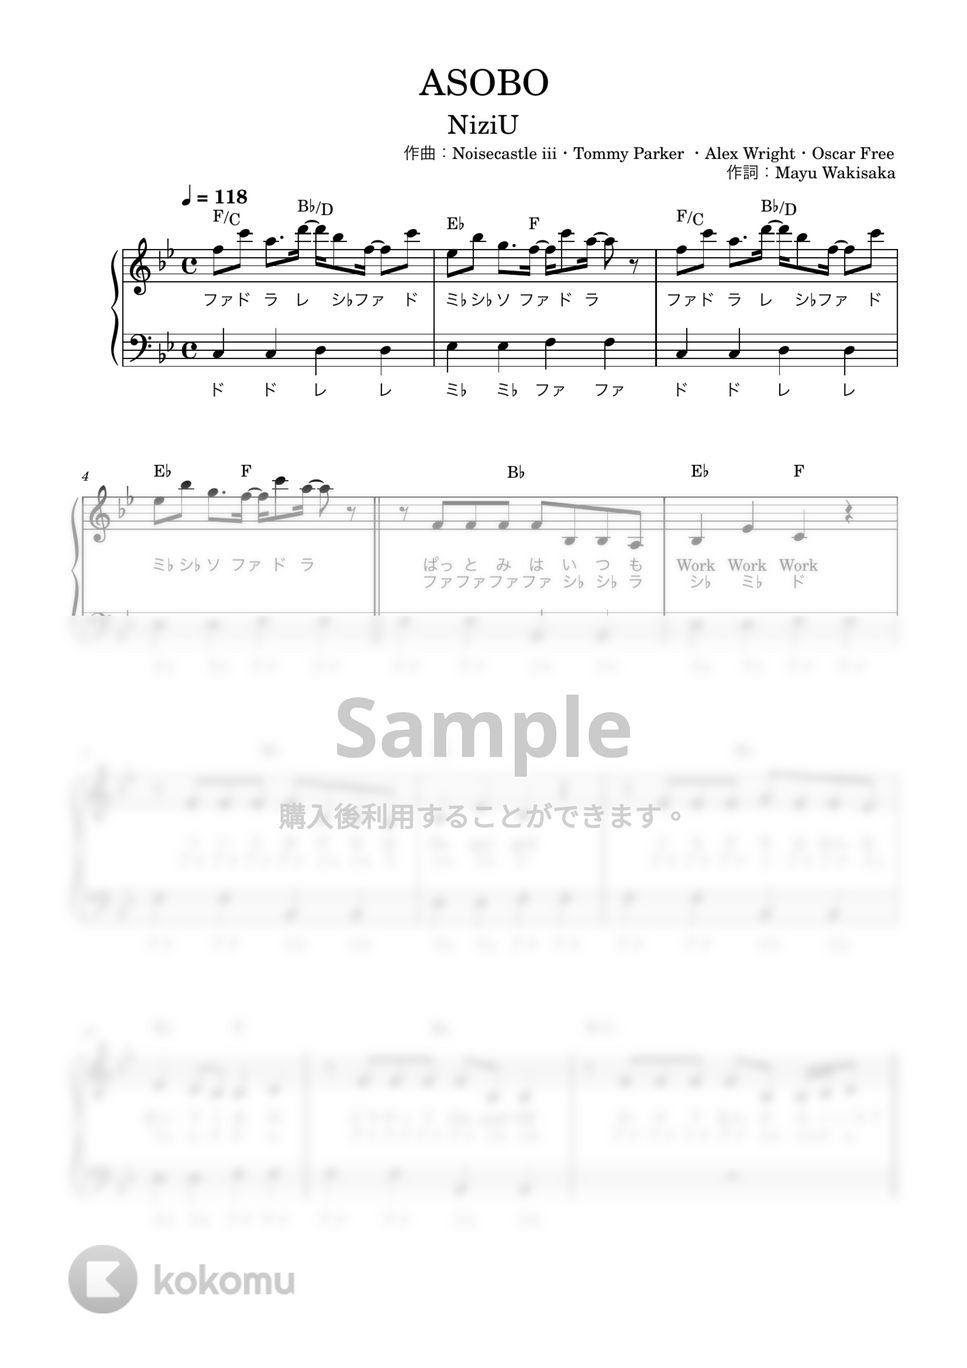 NiziU - ASOBO (かんたん / 歌詞付き / ドレミ付き / 初心者) by piano.tokyo